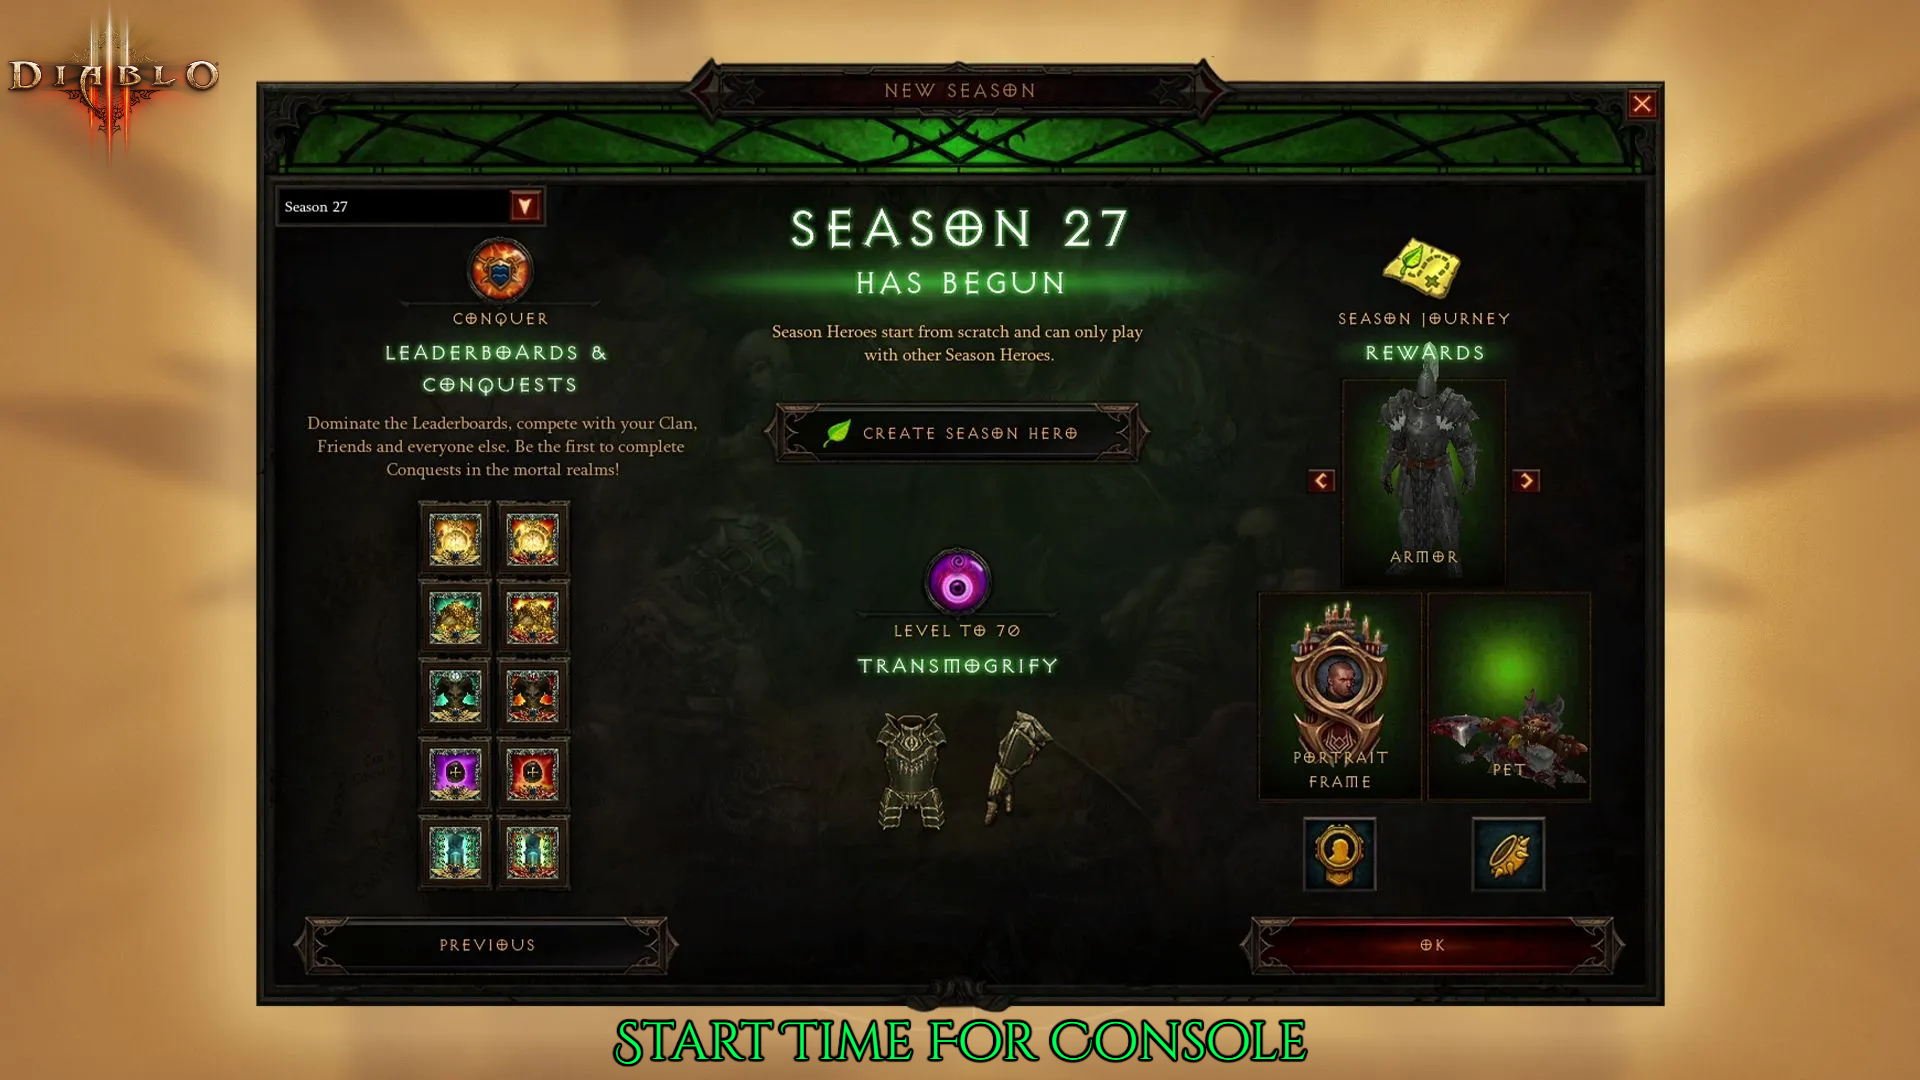 Diablo 3 Season 27 Start Time For Console